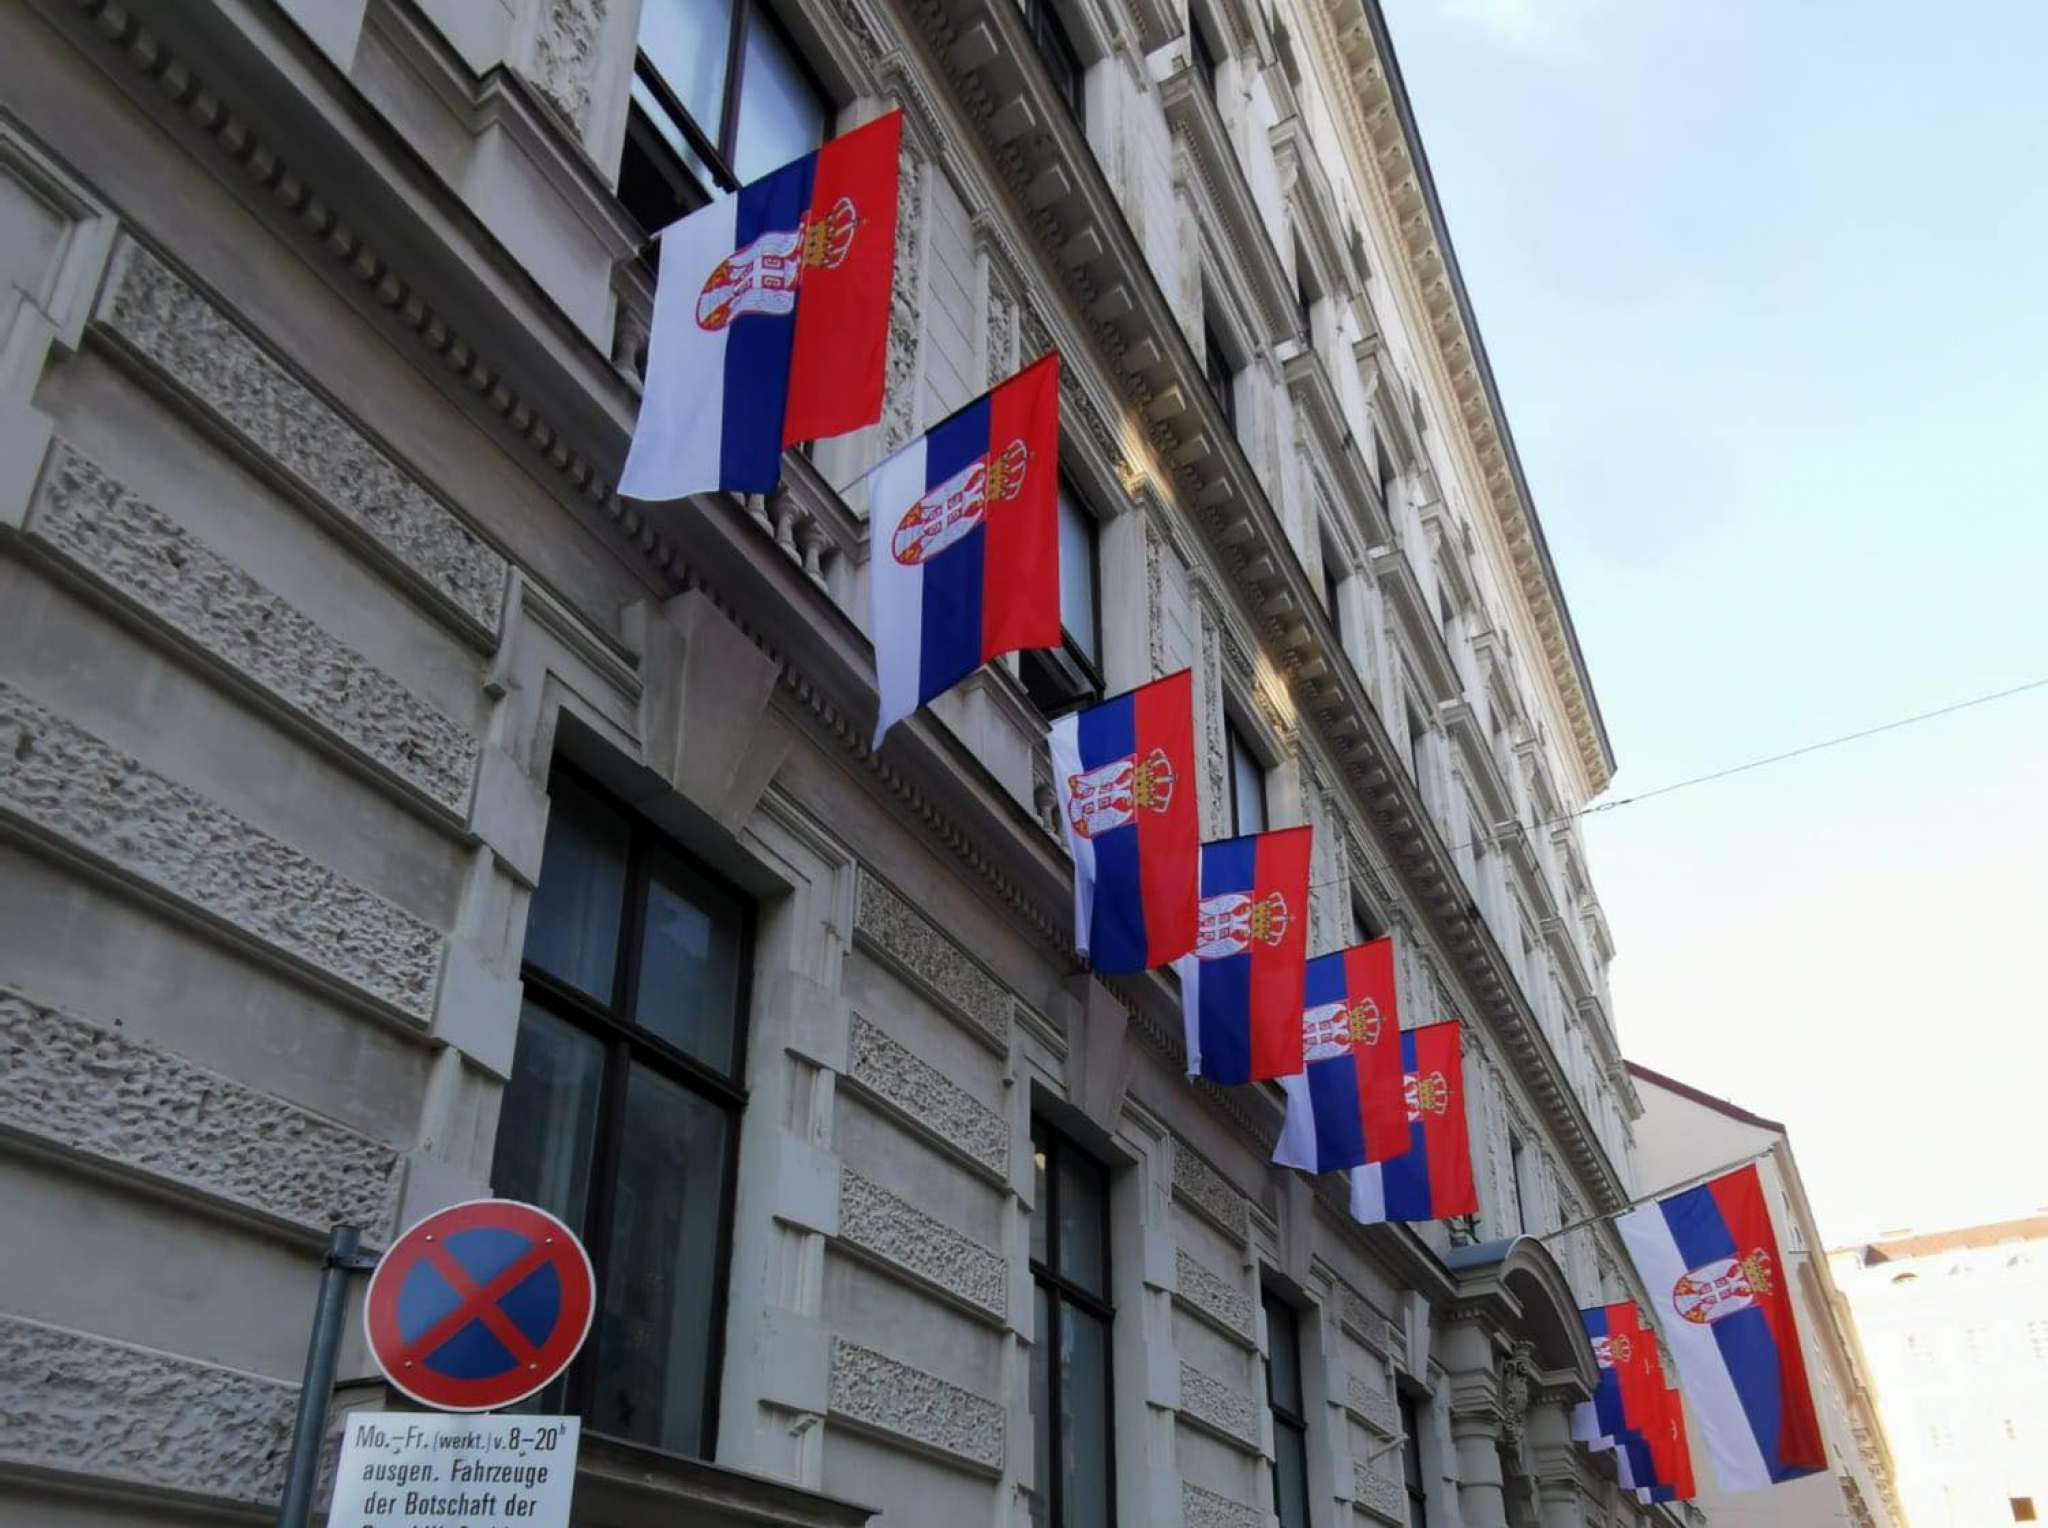 SRBIJA JE VASKRSLA! Srpske zastave se vijore na zgradi ambasade u Austriji (FOTO)